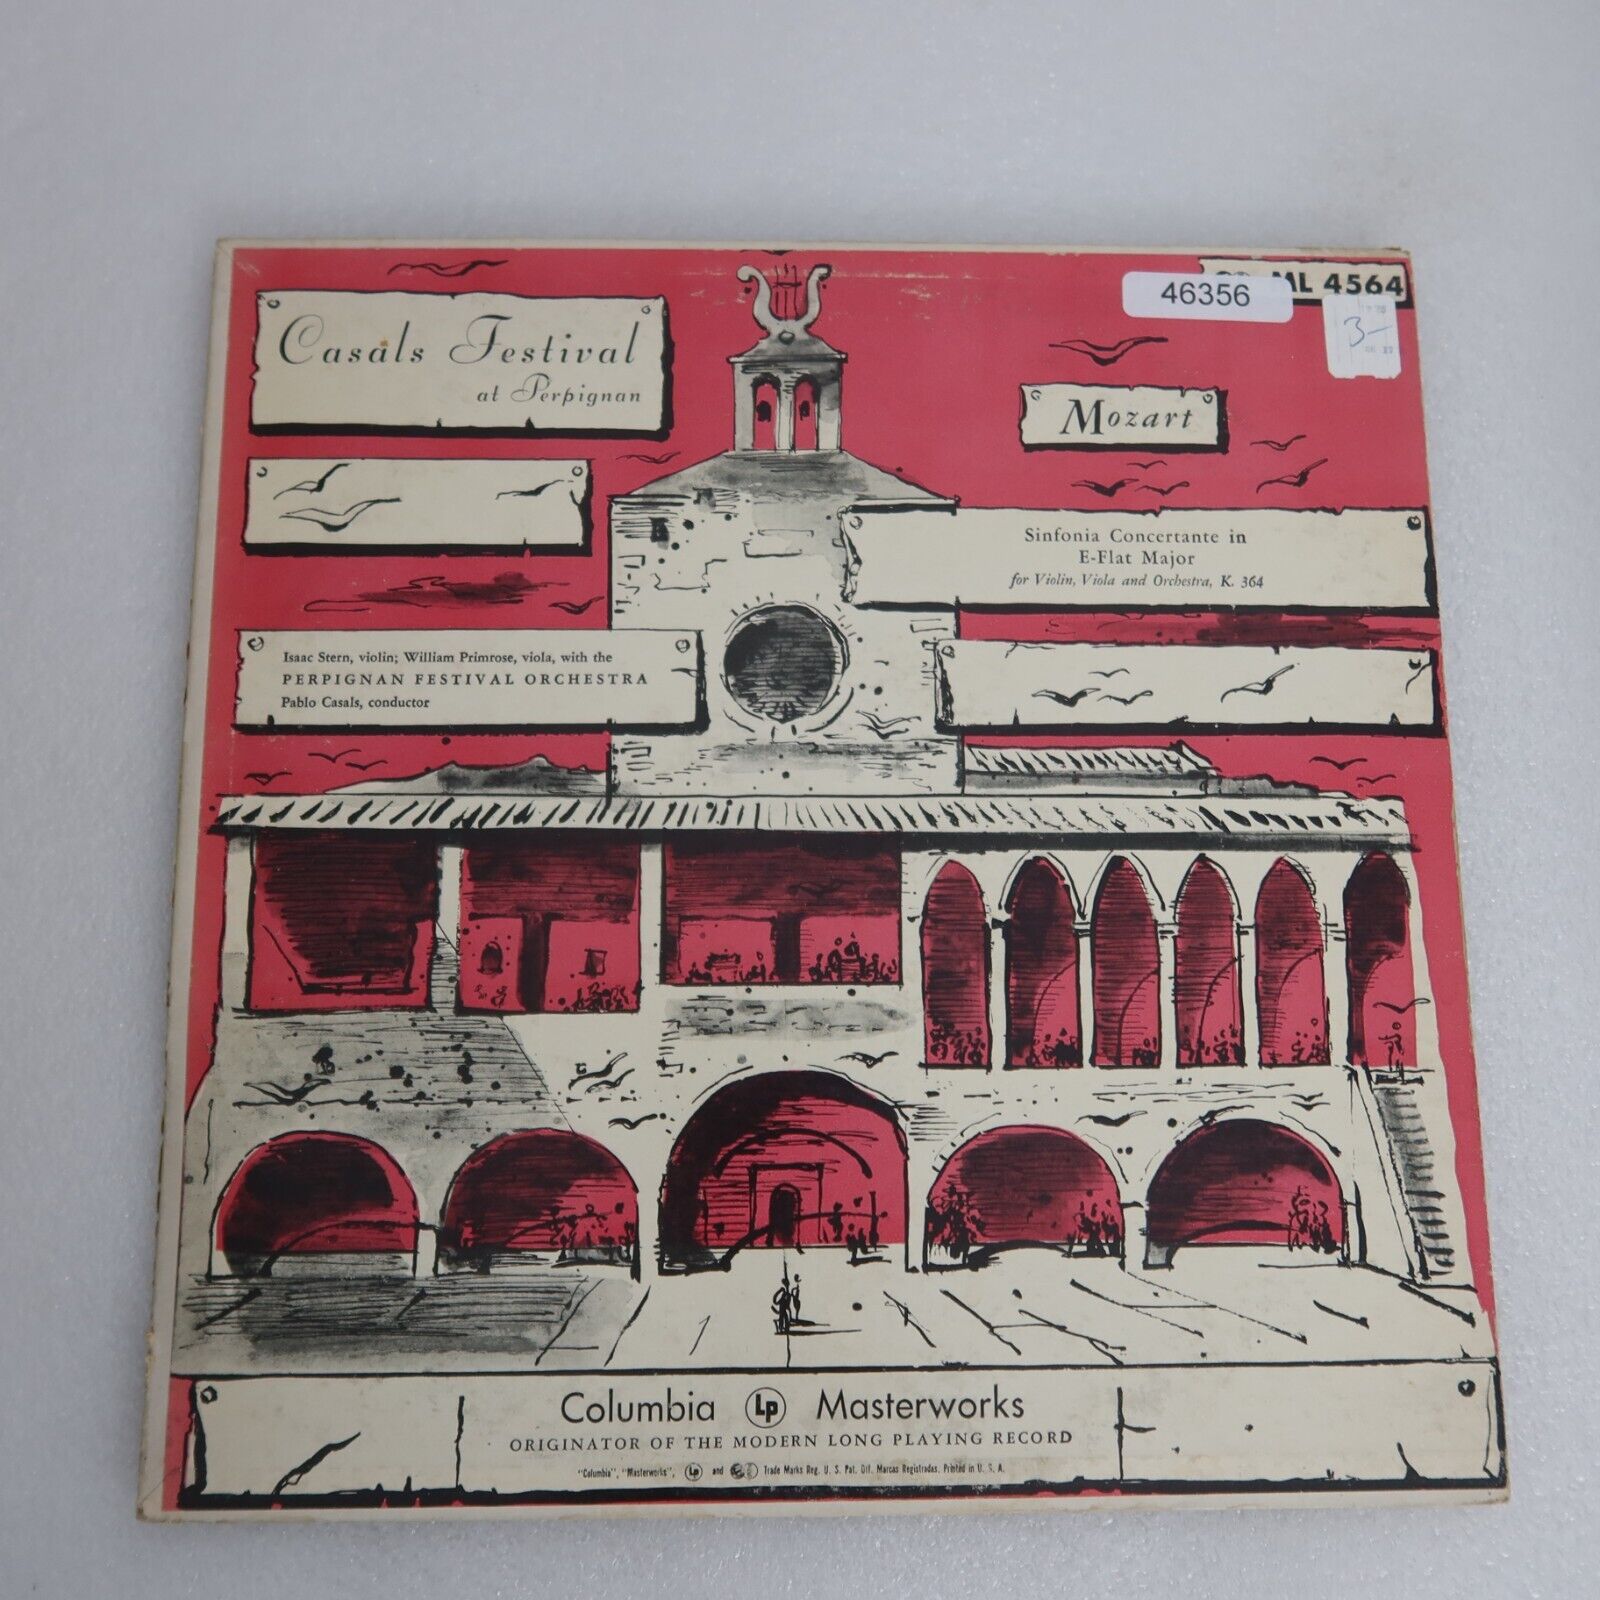 Pablo Casals Mozart Sinfonia Concertante LP Vinyl Record Album